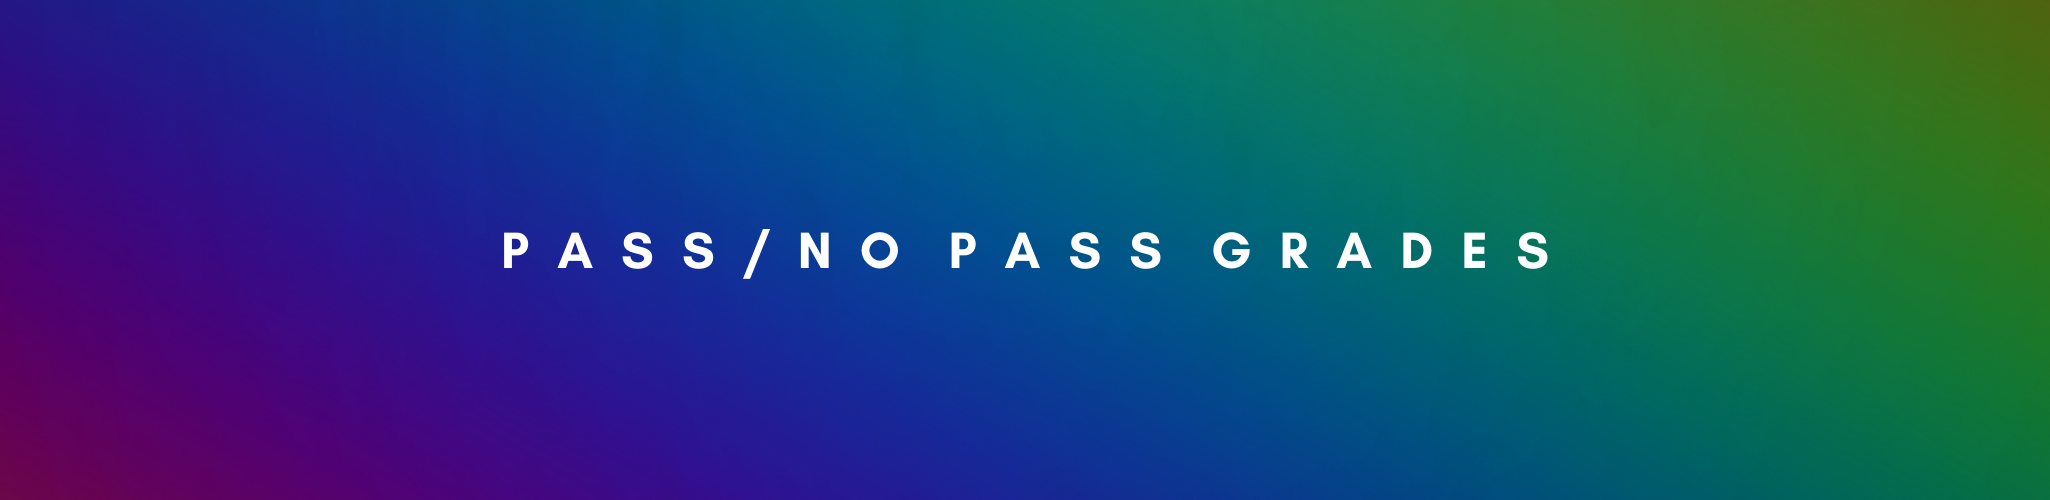 Pass No Pass